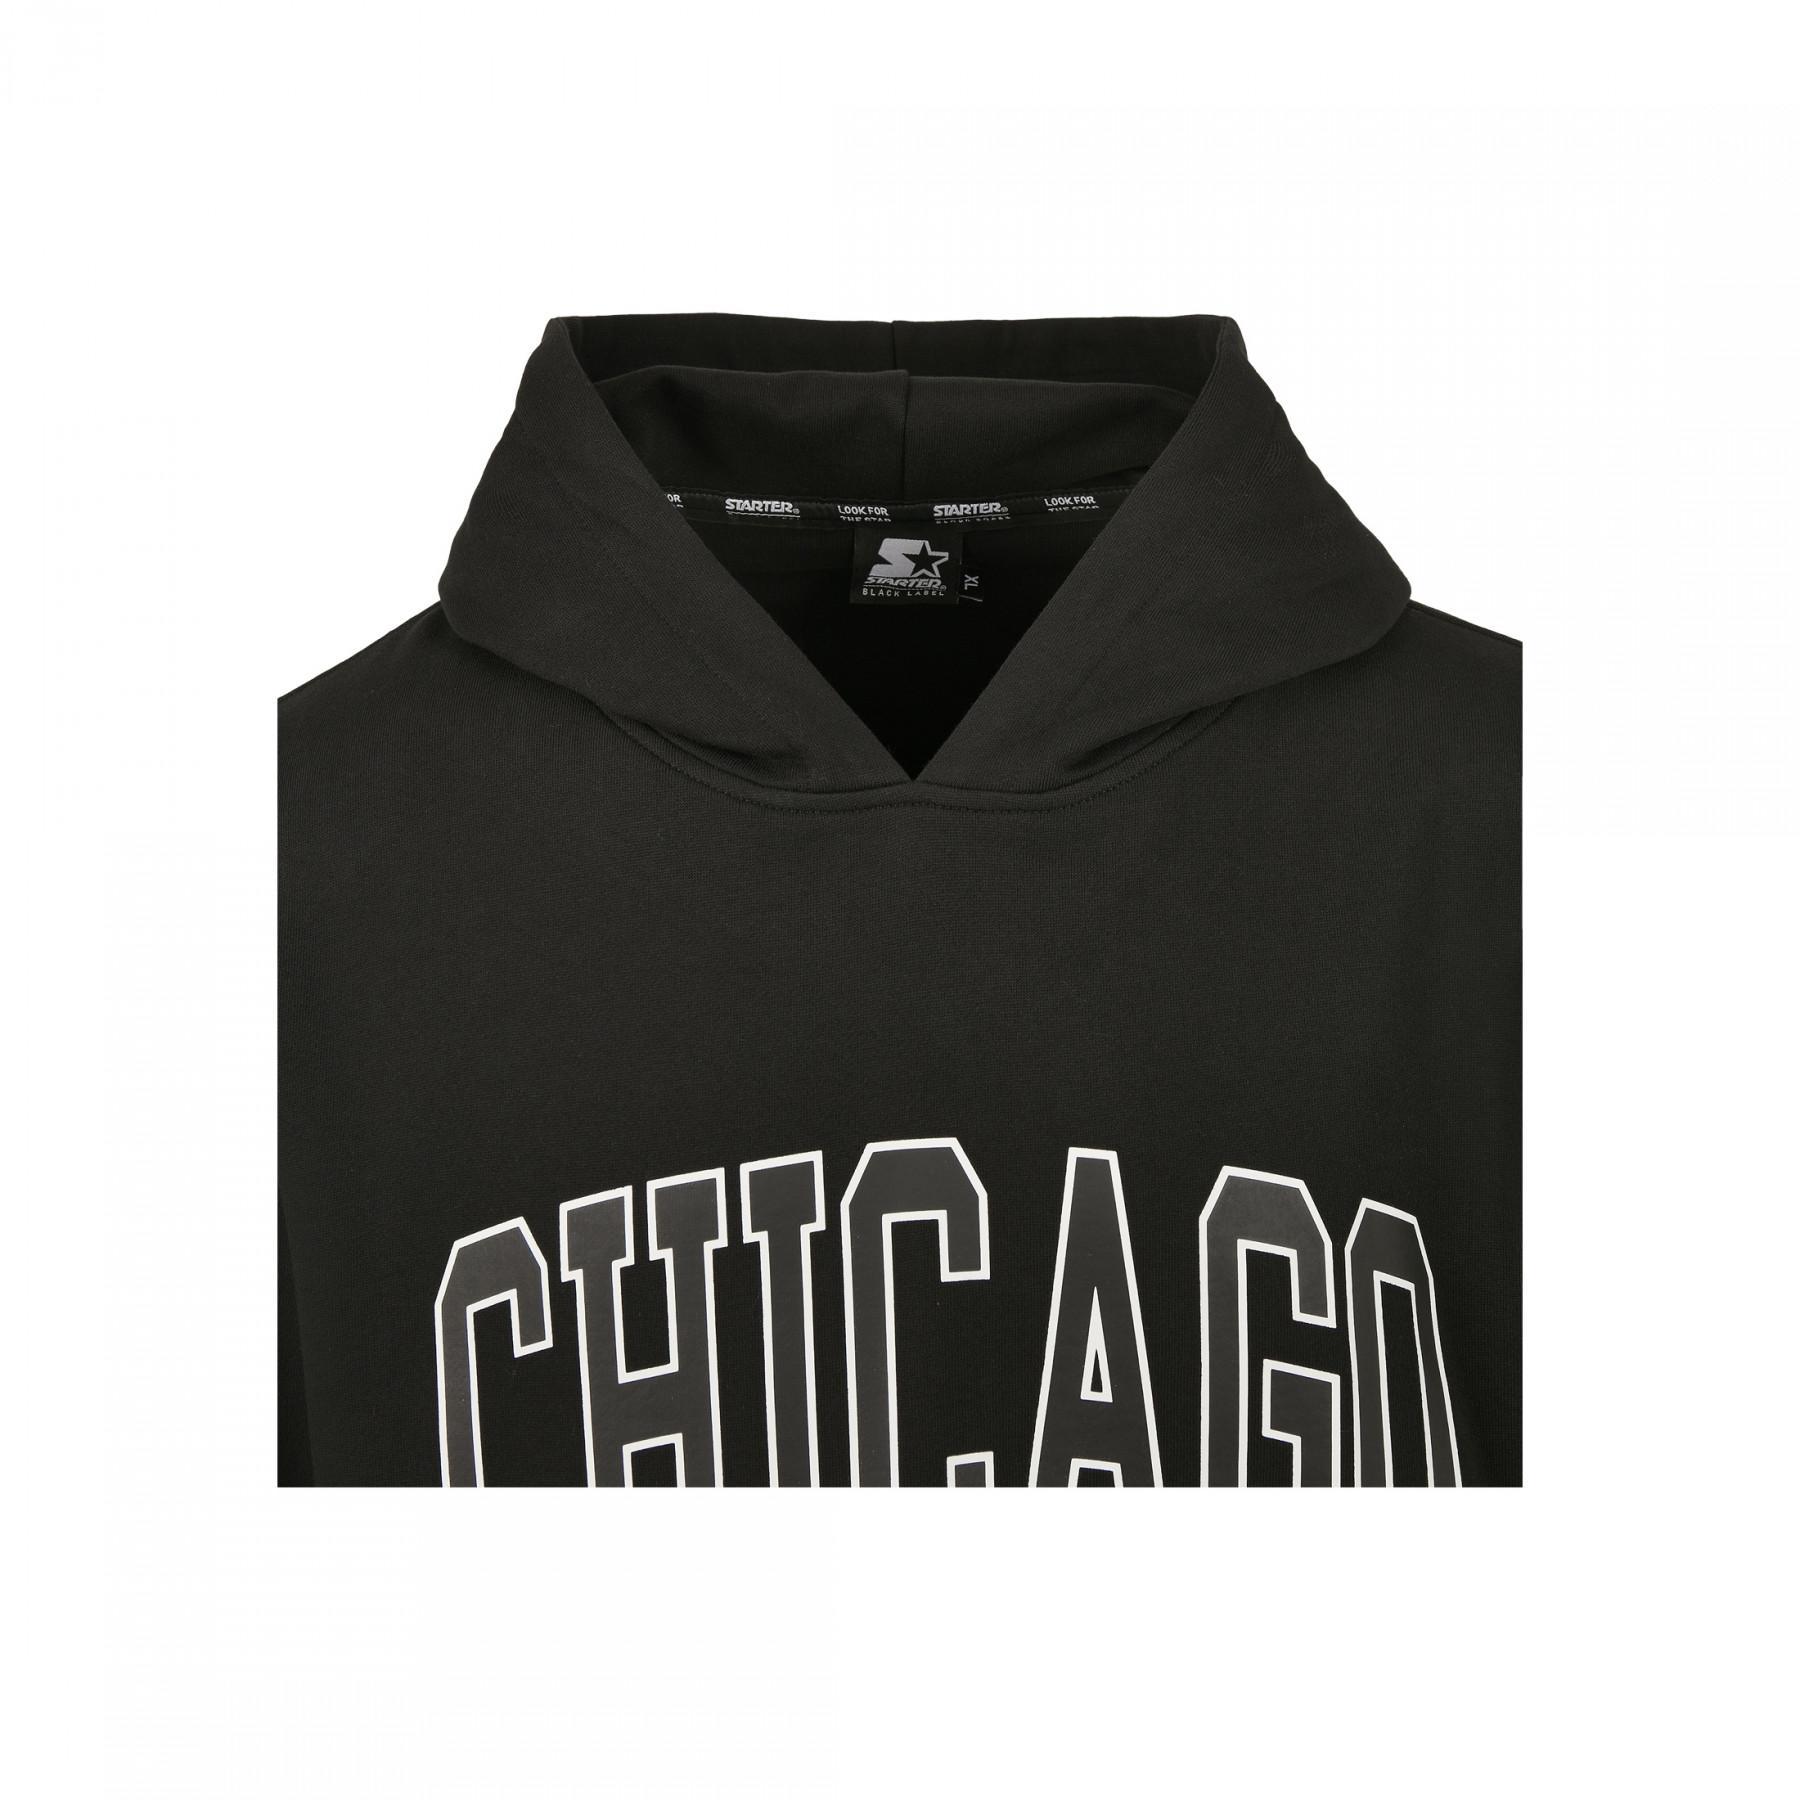 Hooded sweatshirt Urban Classics starter chicago